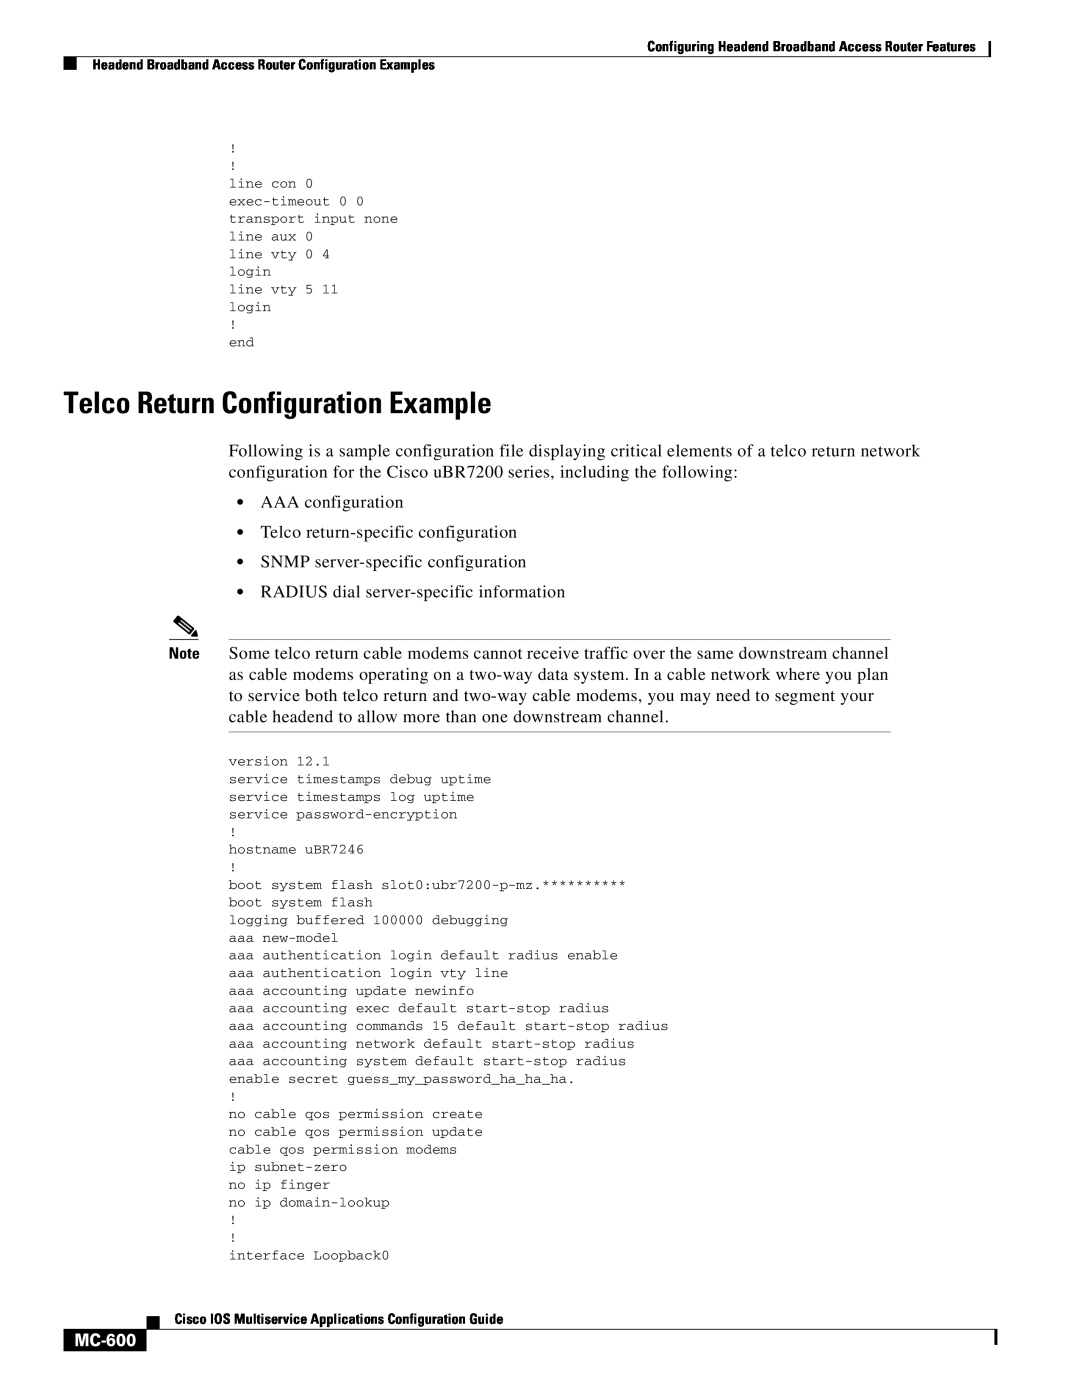 Cisco Systems uBR7200 manual Telco Return Configuration Example, MC-600 